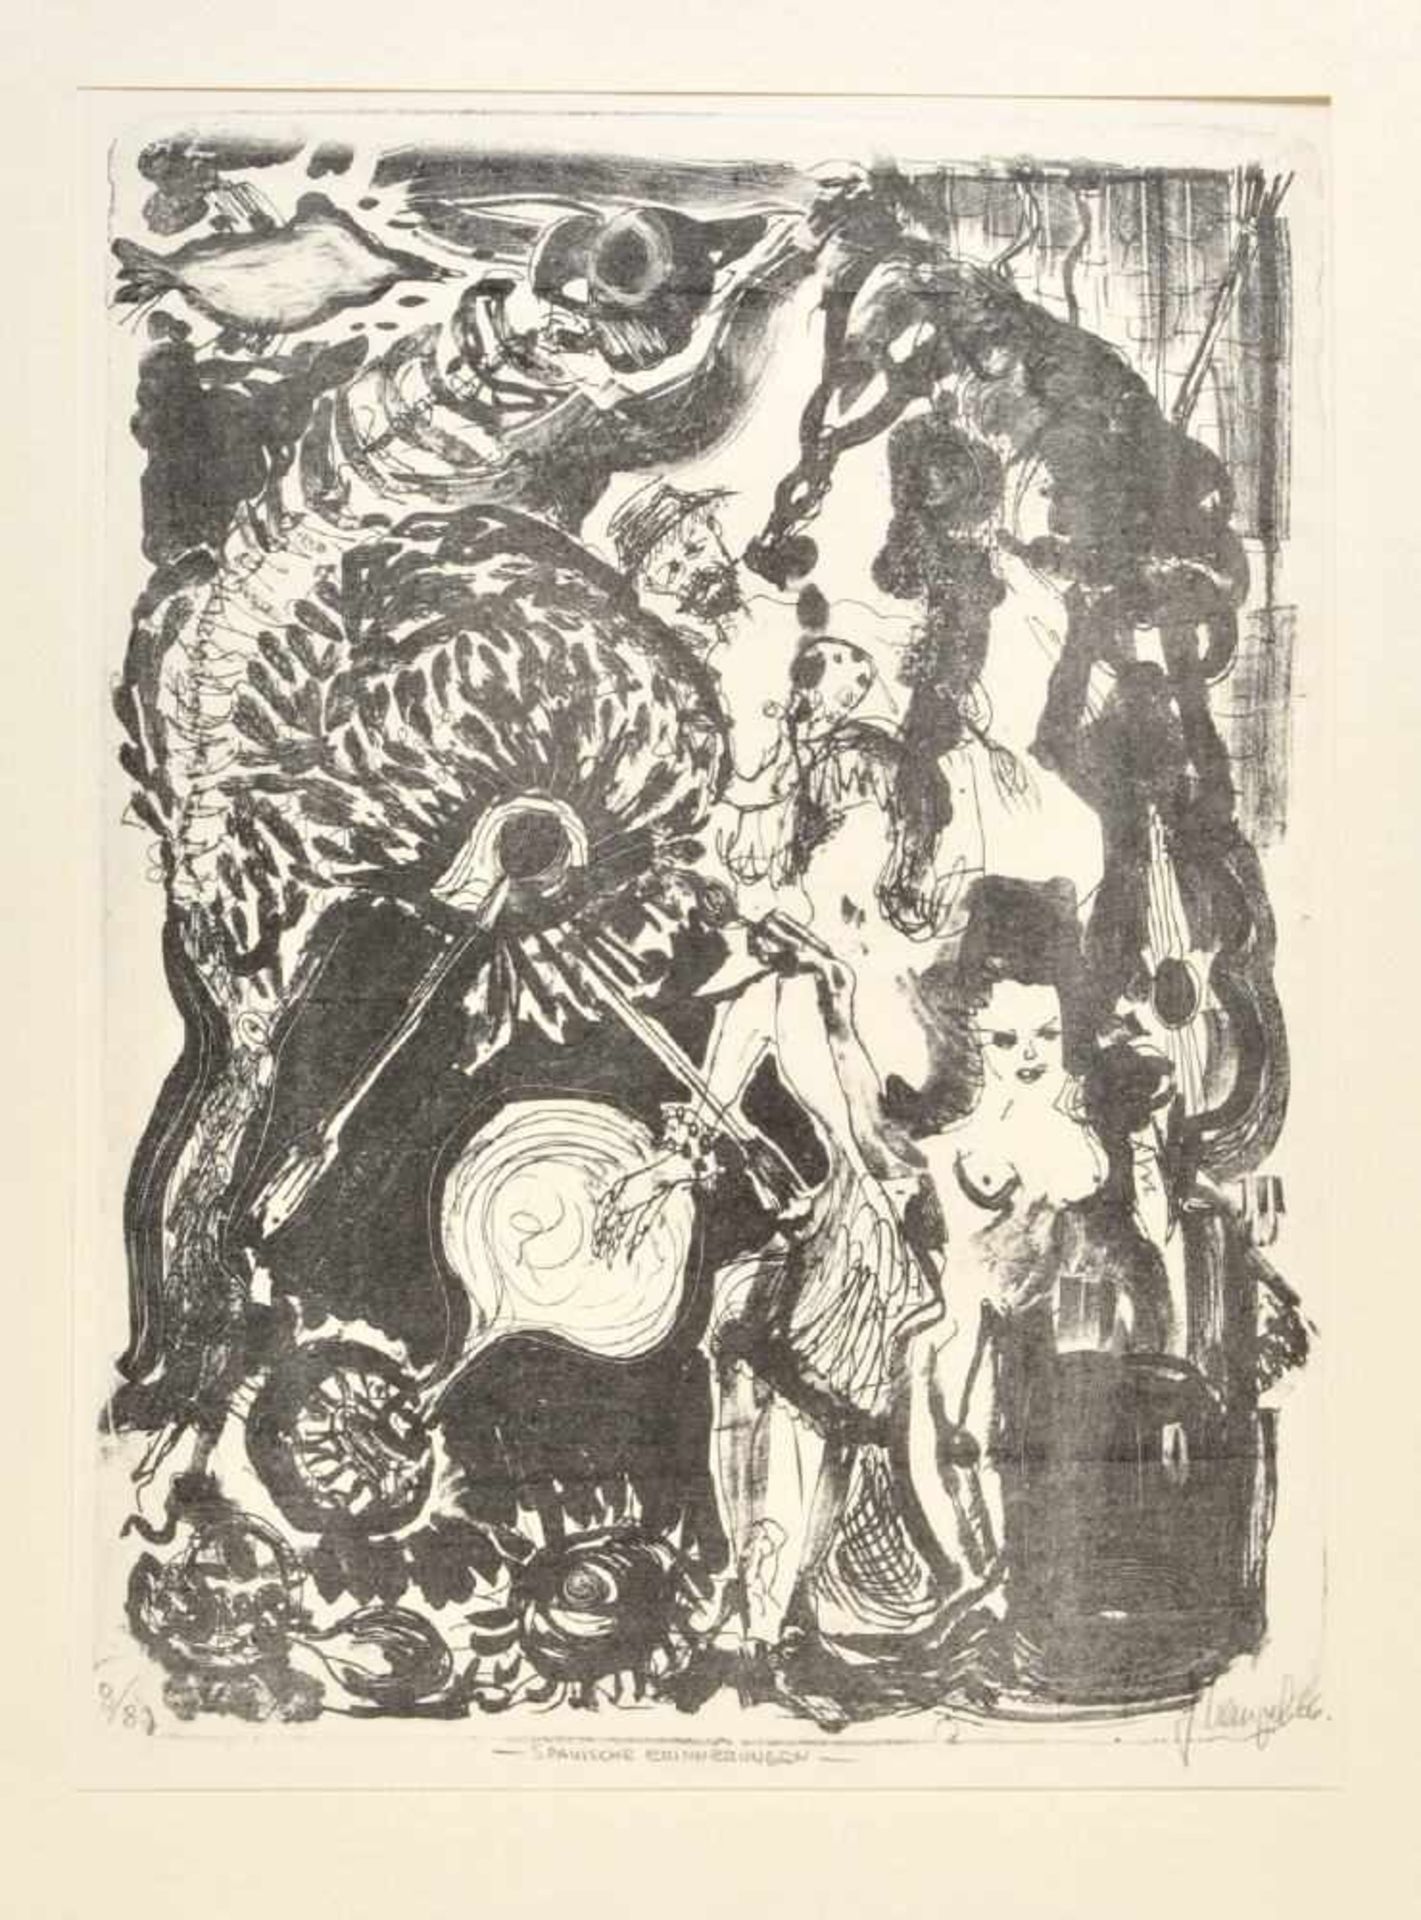 Hempel, Frank, 1940Lithographie, 49 x 37,5 cm, betit. "Spanische Erinnerungen ", handsign., dat. (